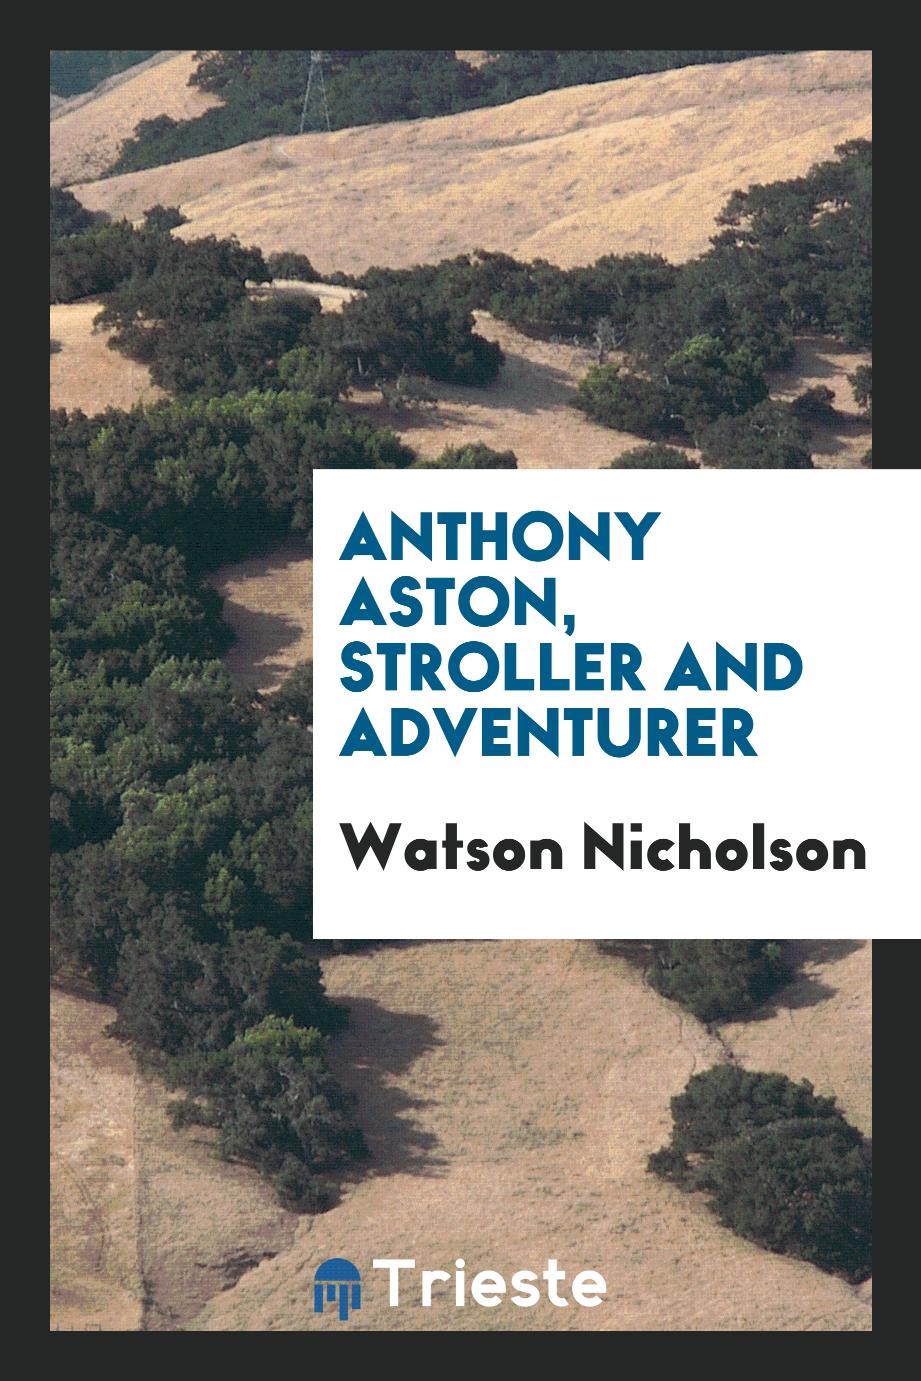 Anthony Aston, Stroller and Adventurer